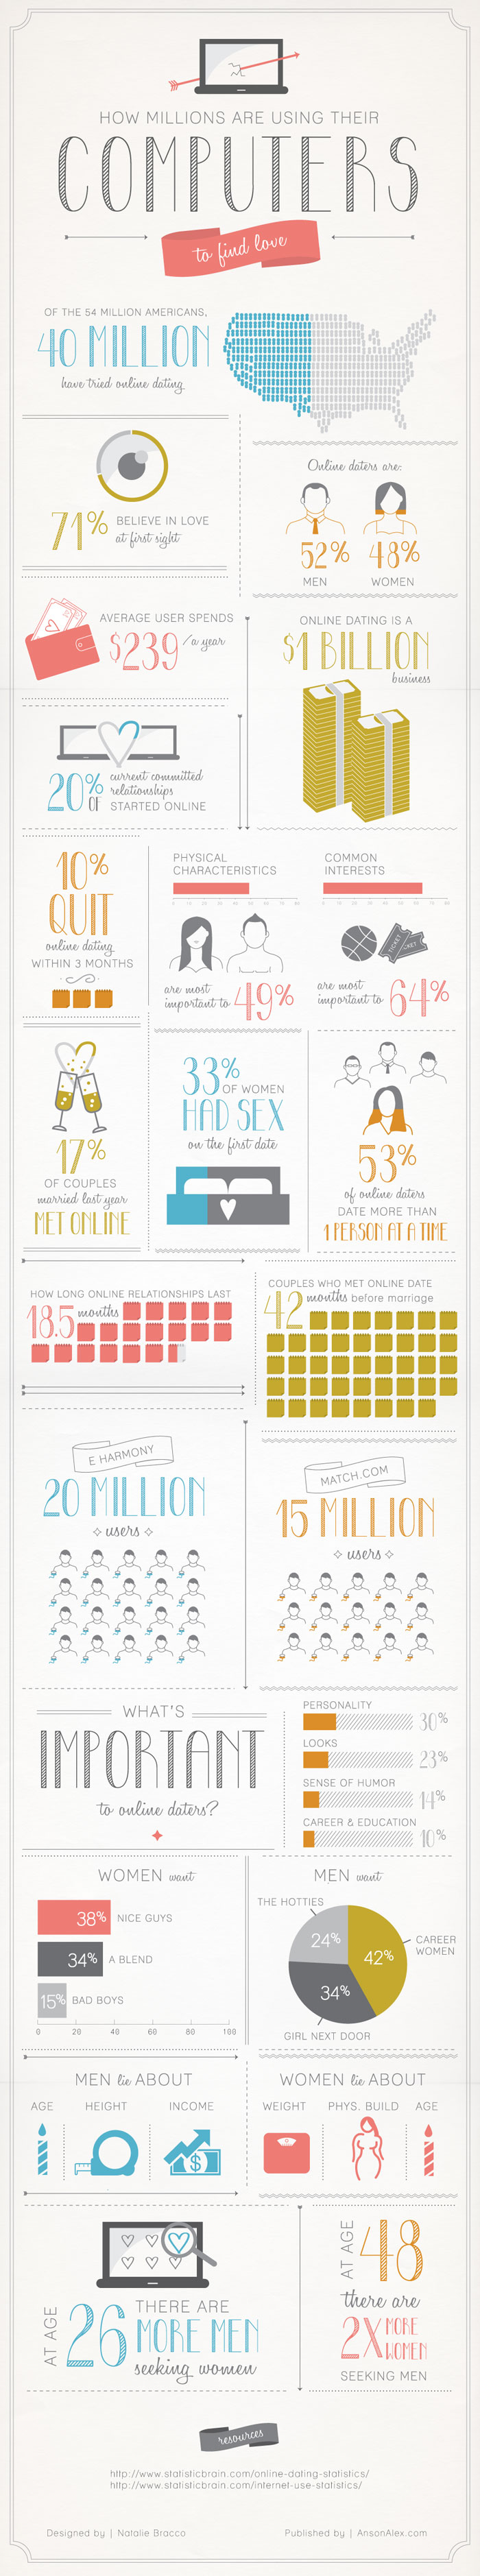 online dating statistics 2013